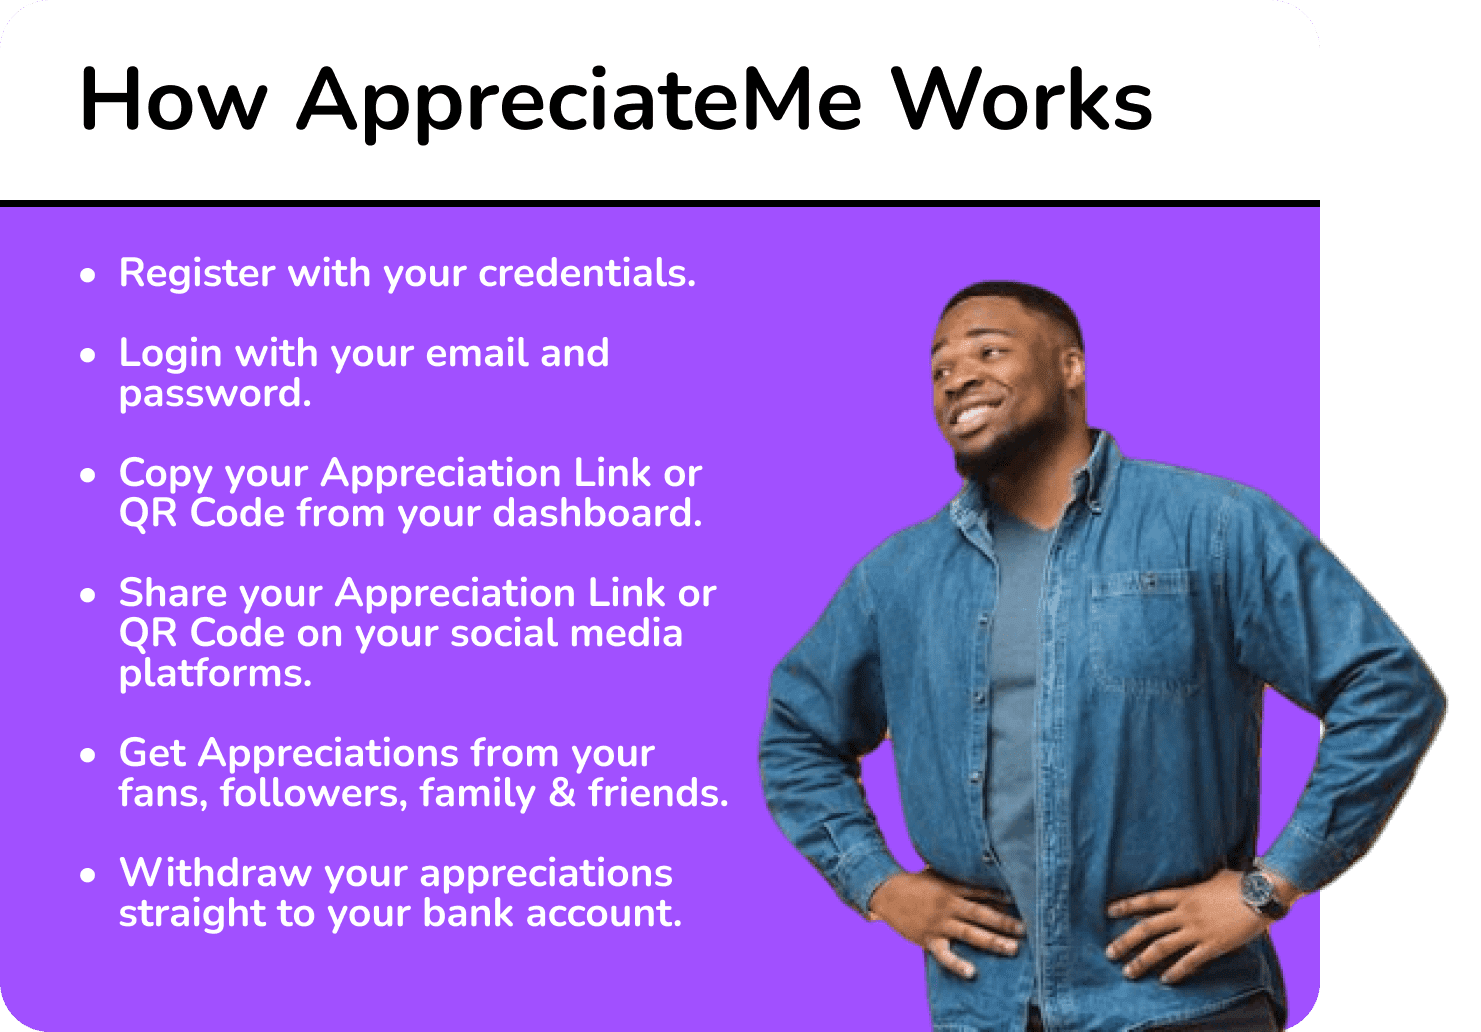 Appreciate Me. How it works